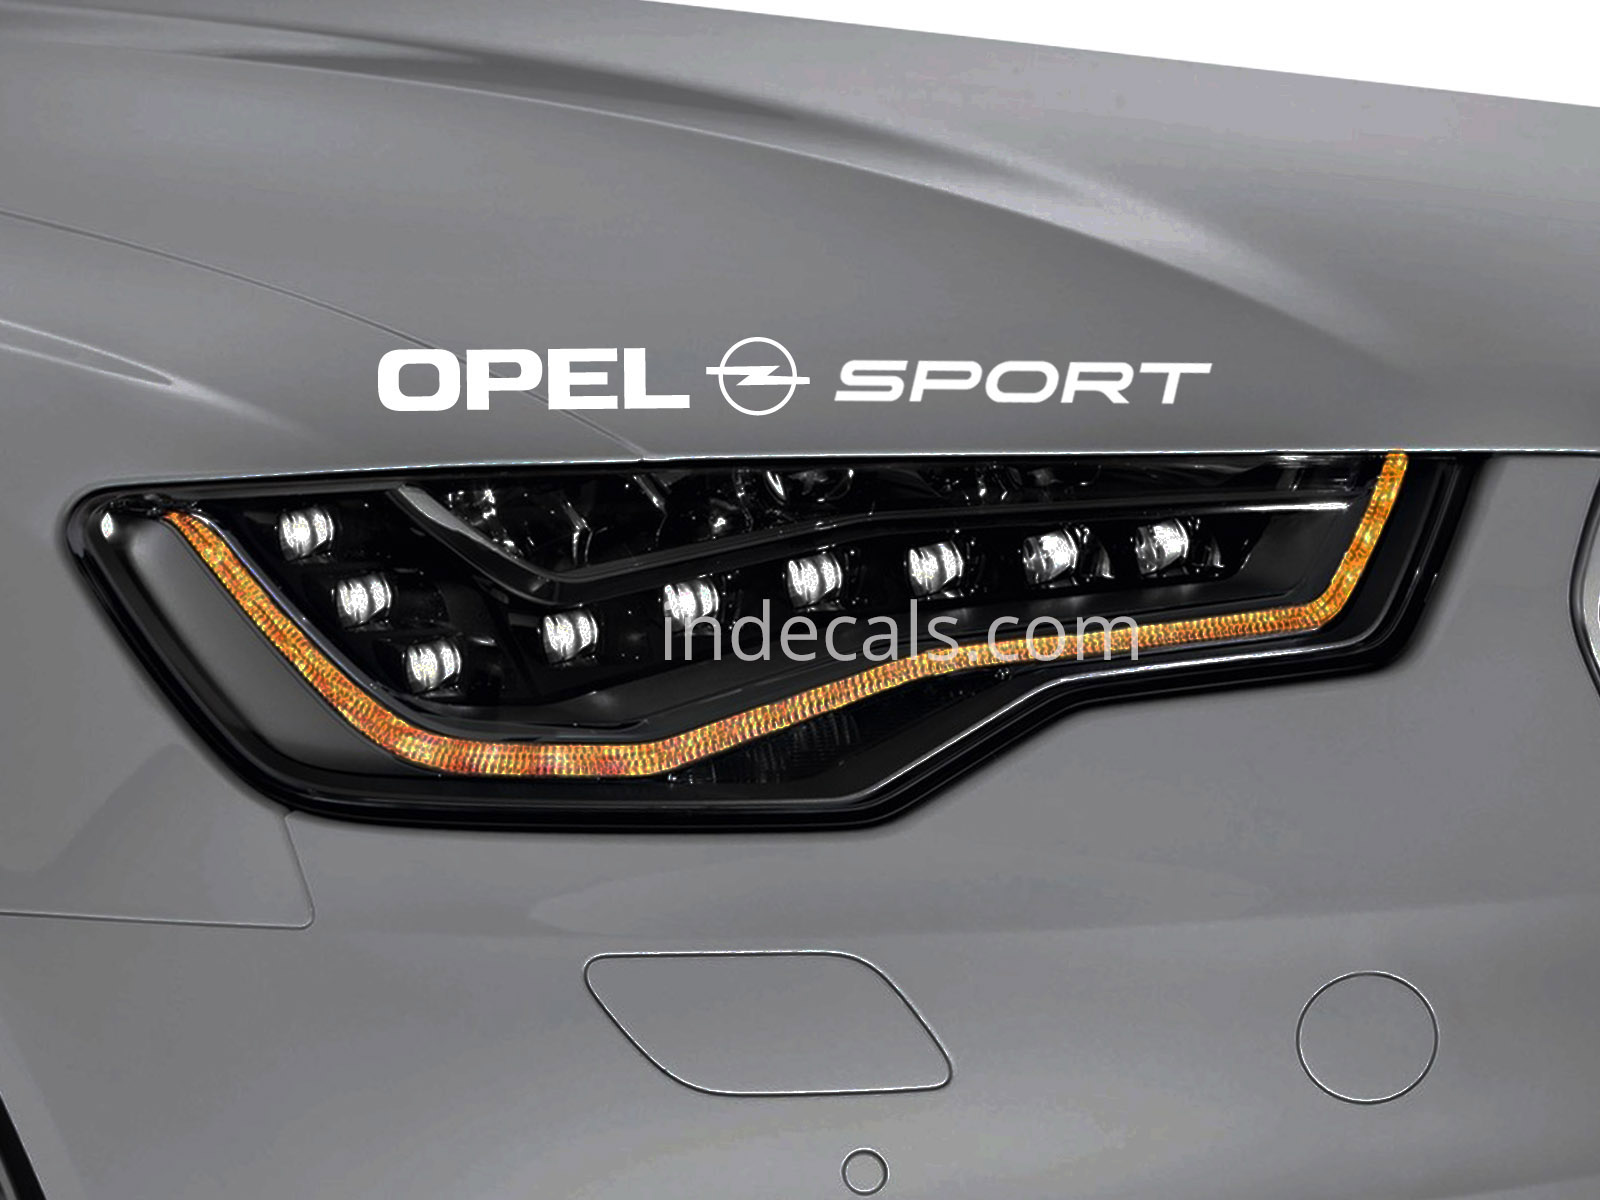 1 x Opel Sport Sticker for Eyebrow - White